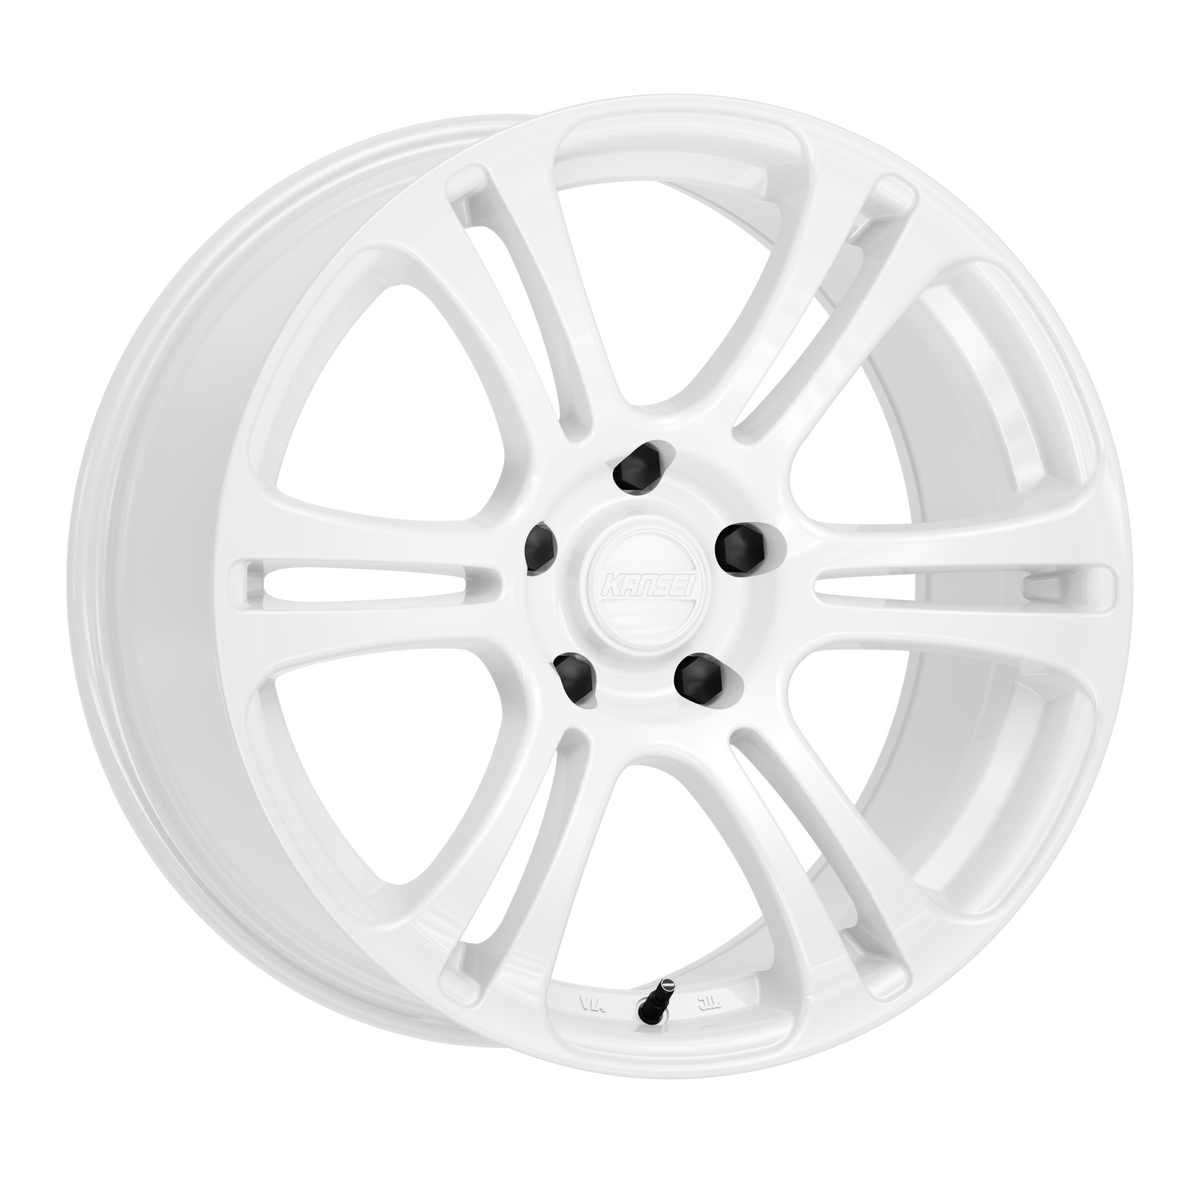 K16W NEO Wheel, Size: 18" x 9.50", Bolt Pattern: 5 x 114.300 mm, Backspace: 6.12" [Finish: Gloss White]